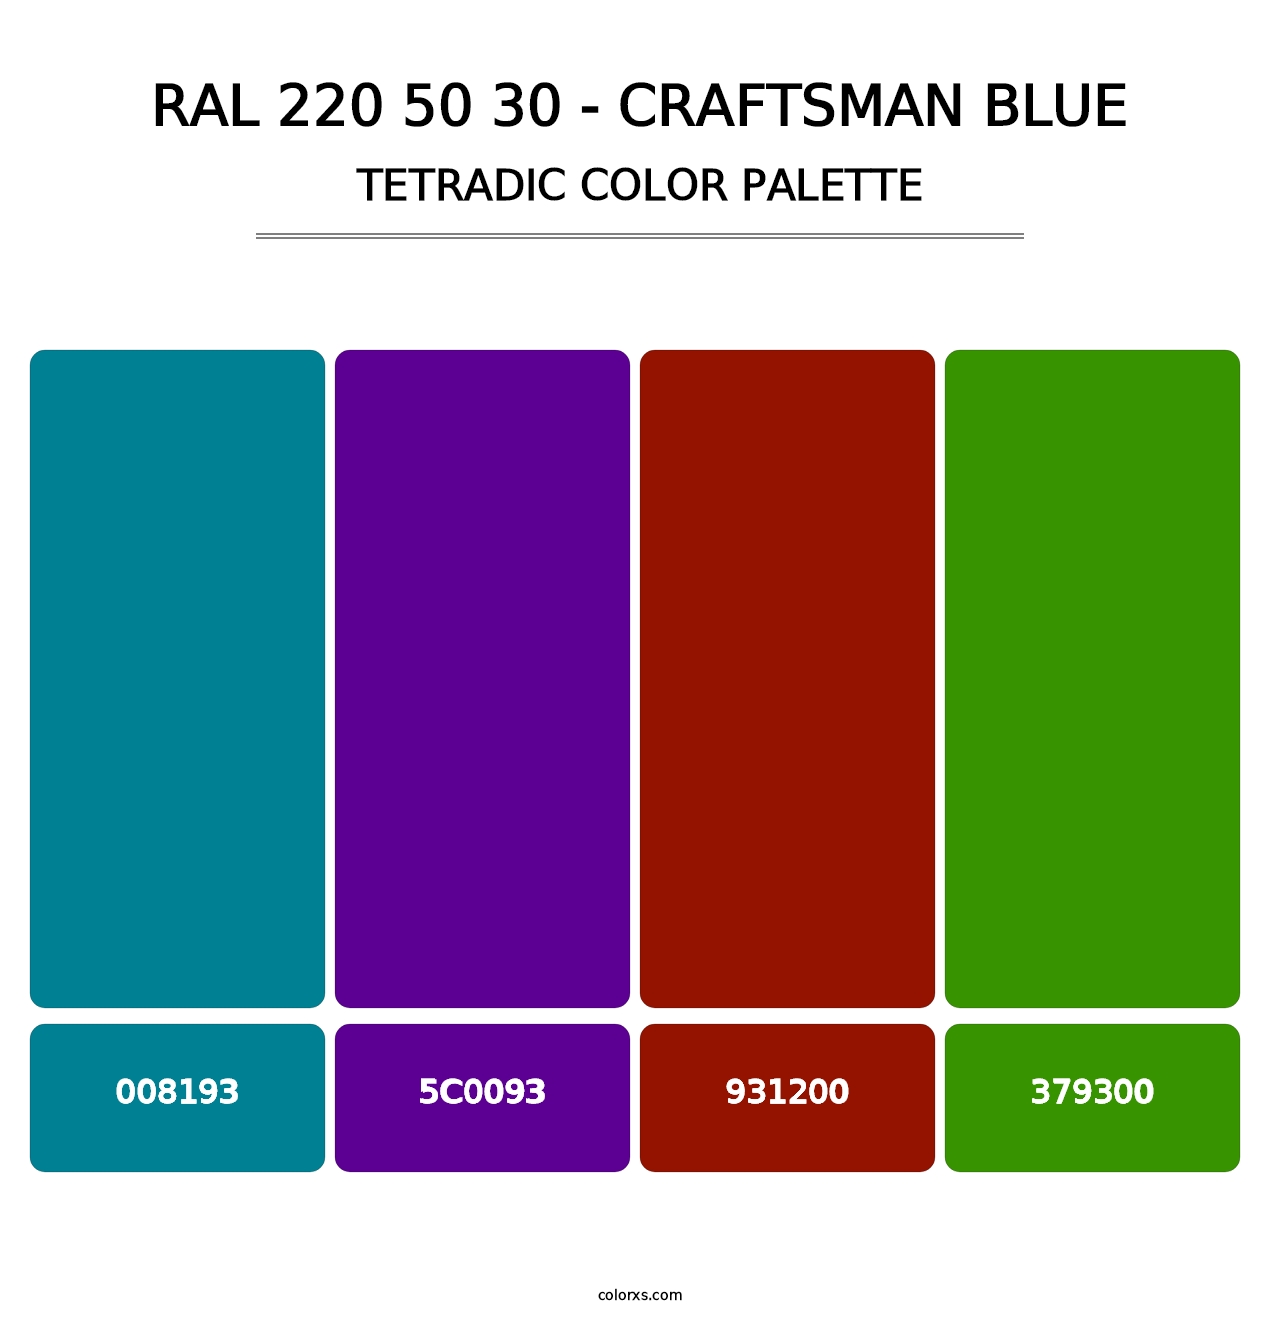 RAL 220 50 30 - Craftsman Blue - Tetradic Color Palette